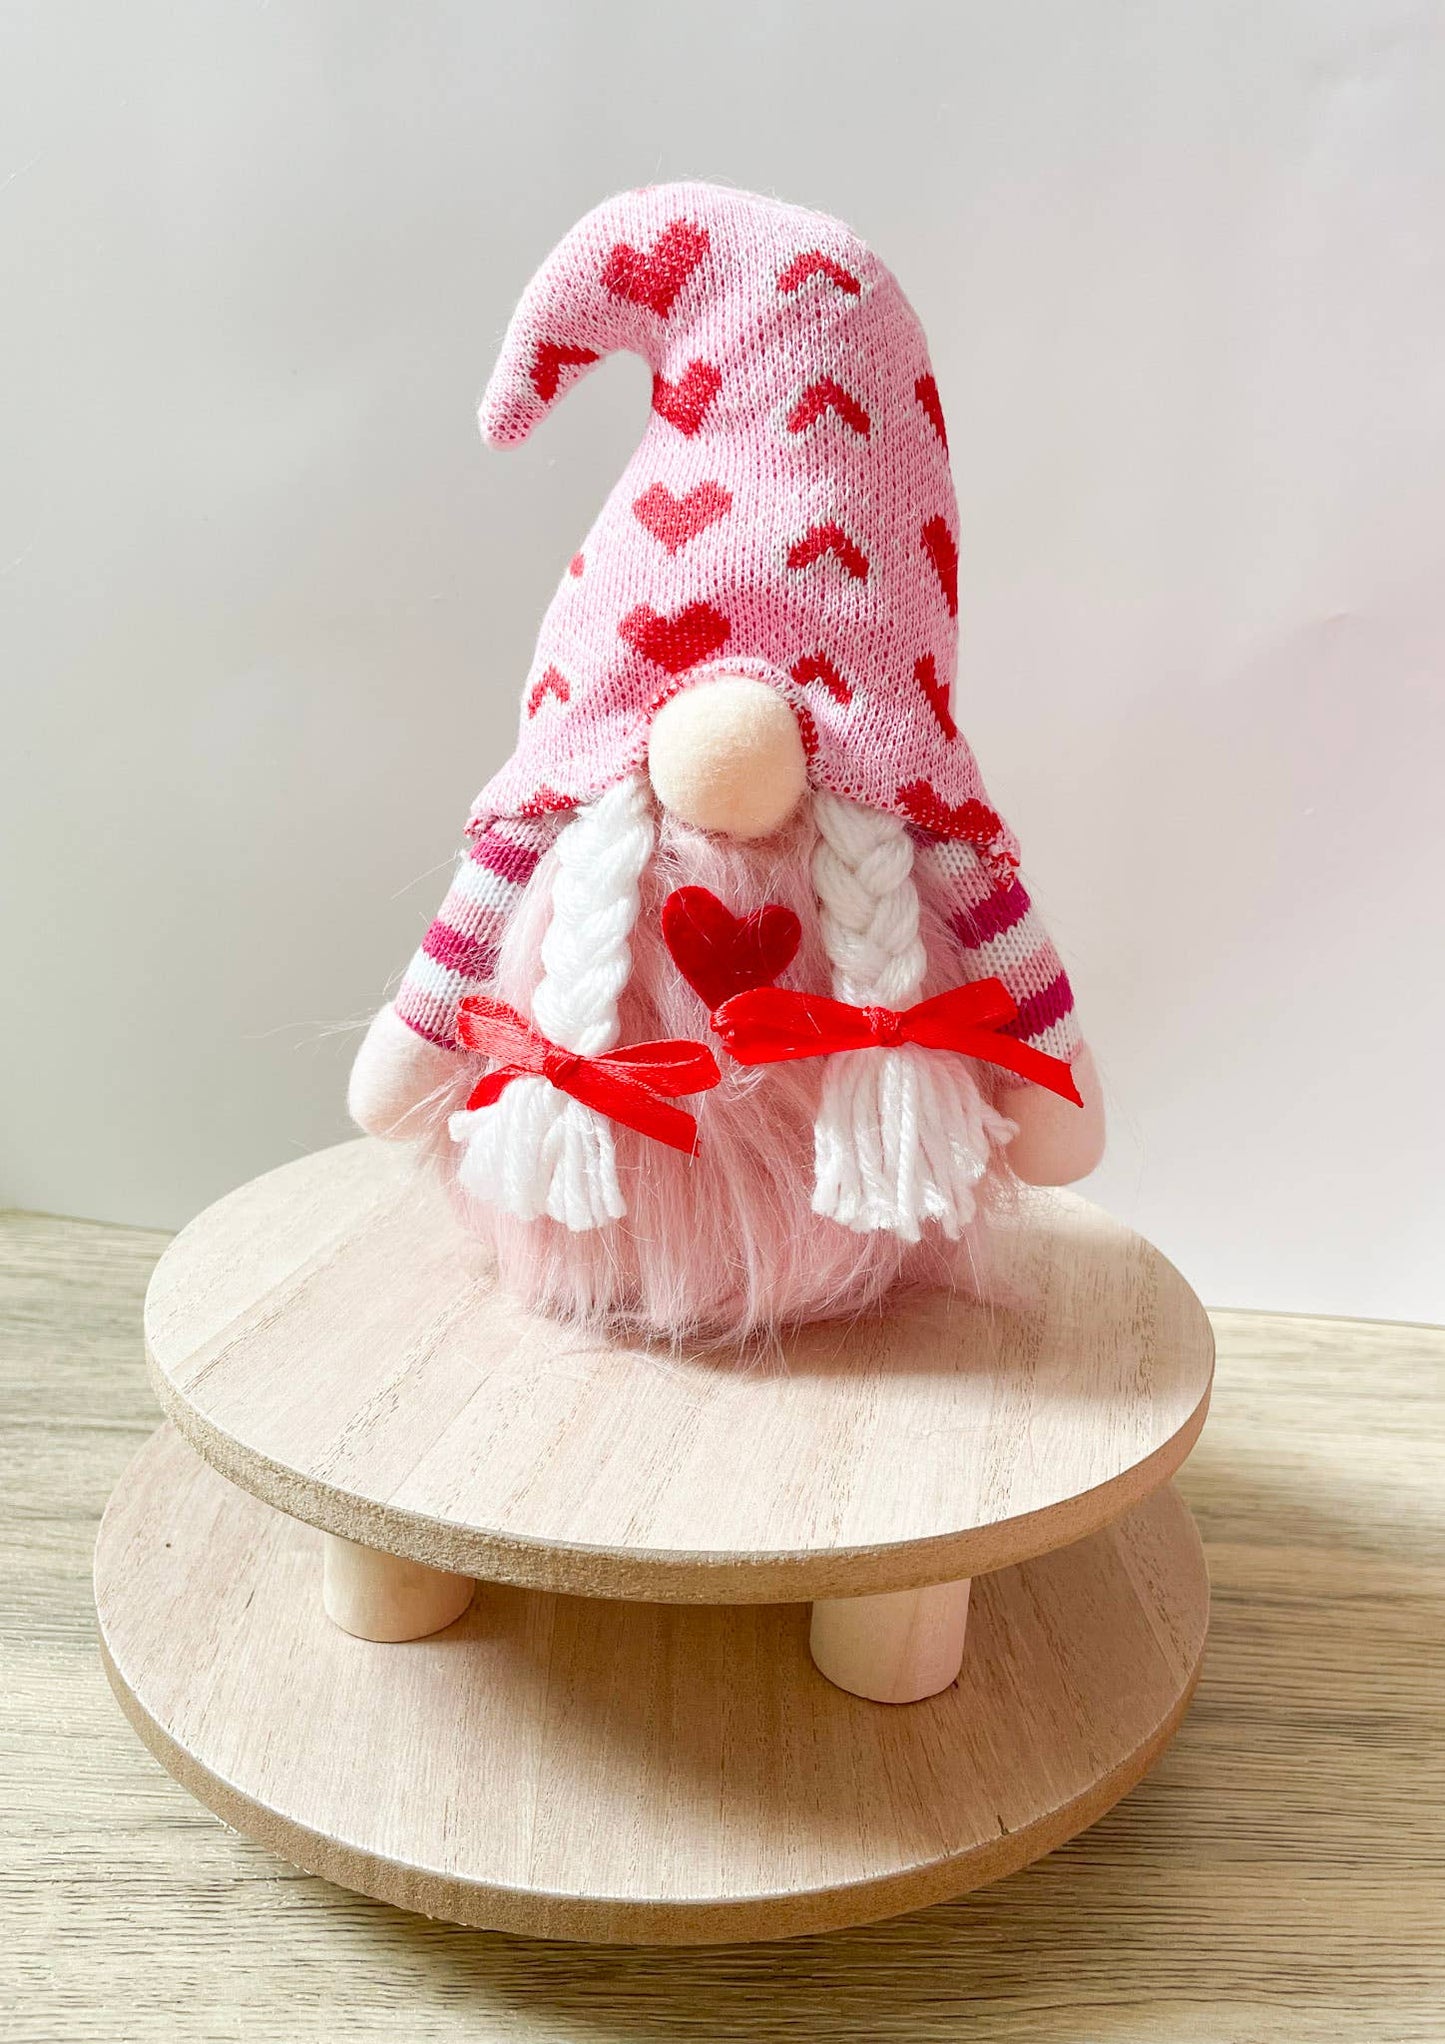 Valentine Gnome-Pink Heart Hat with White Braids